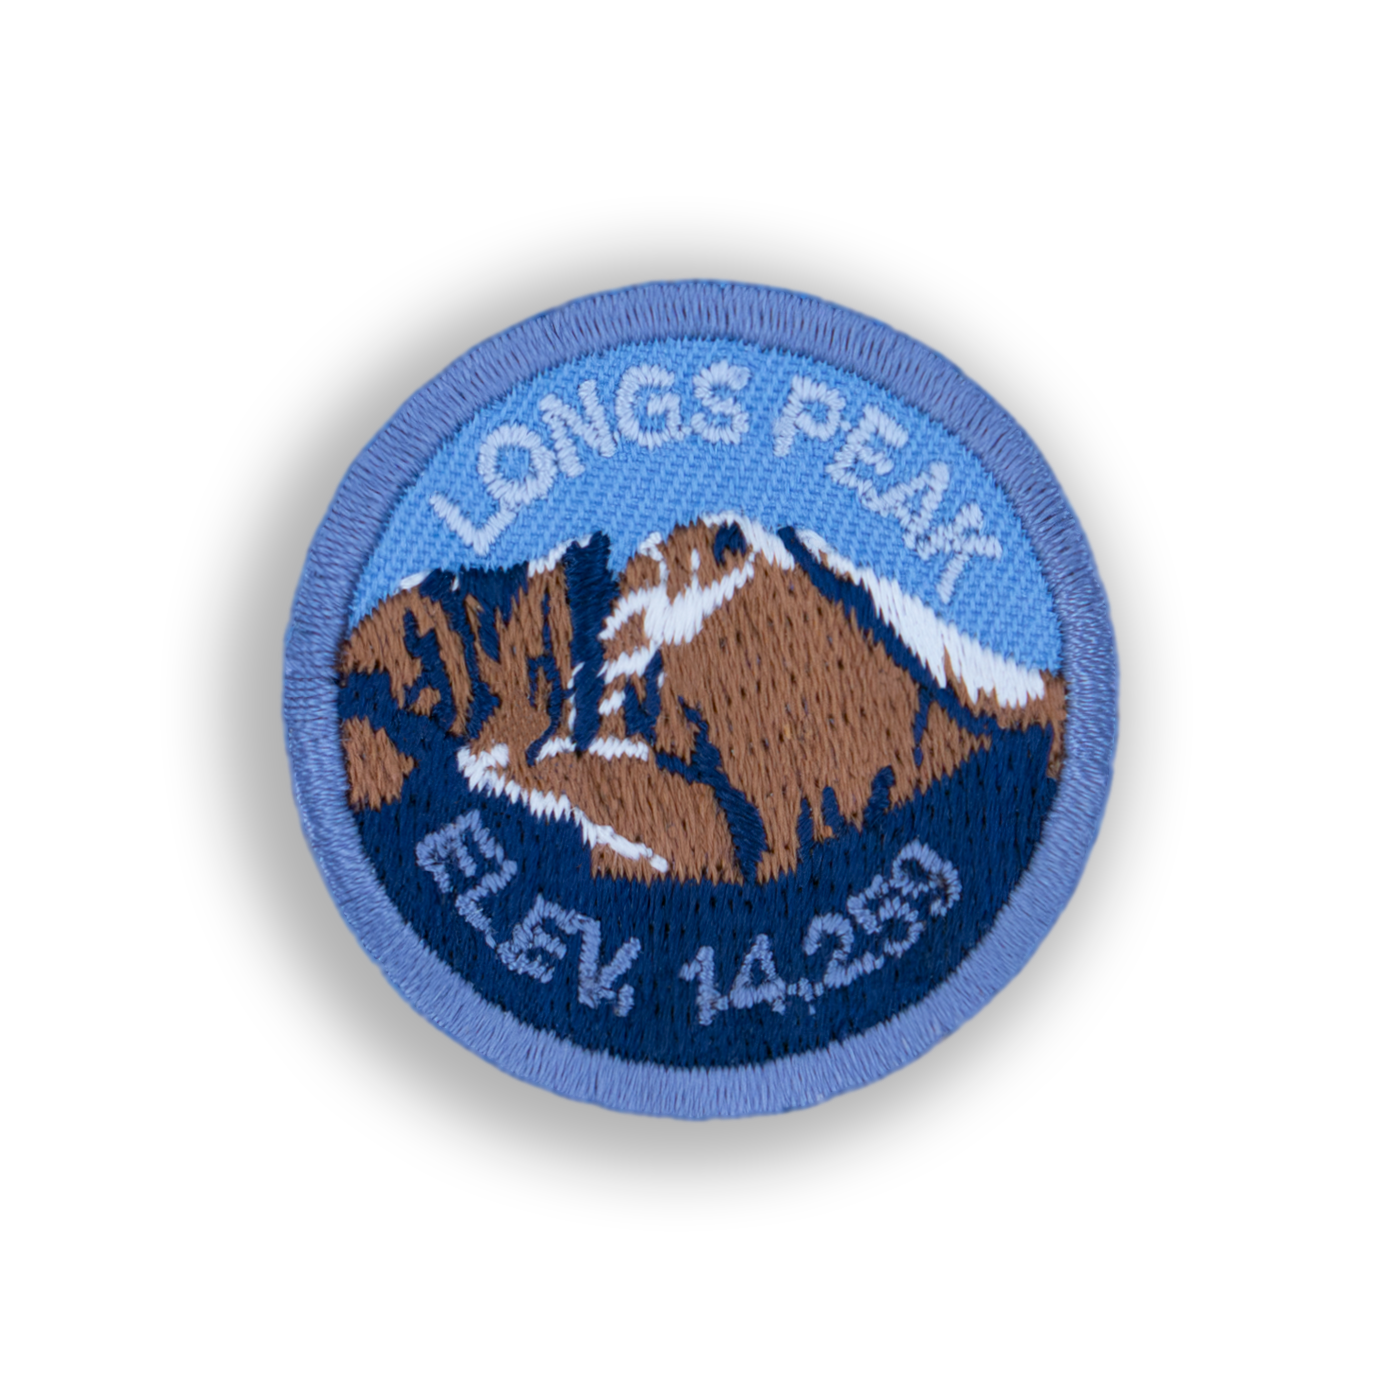 Longs Peak Patch | Demerit Wear - Fake Merit Badges